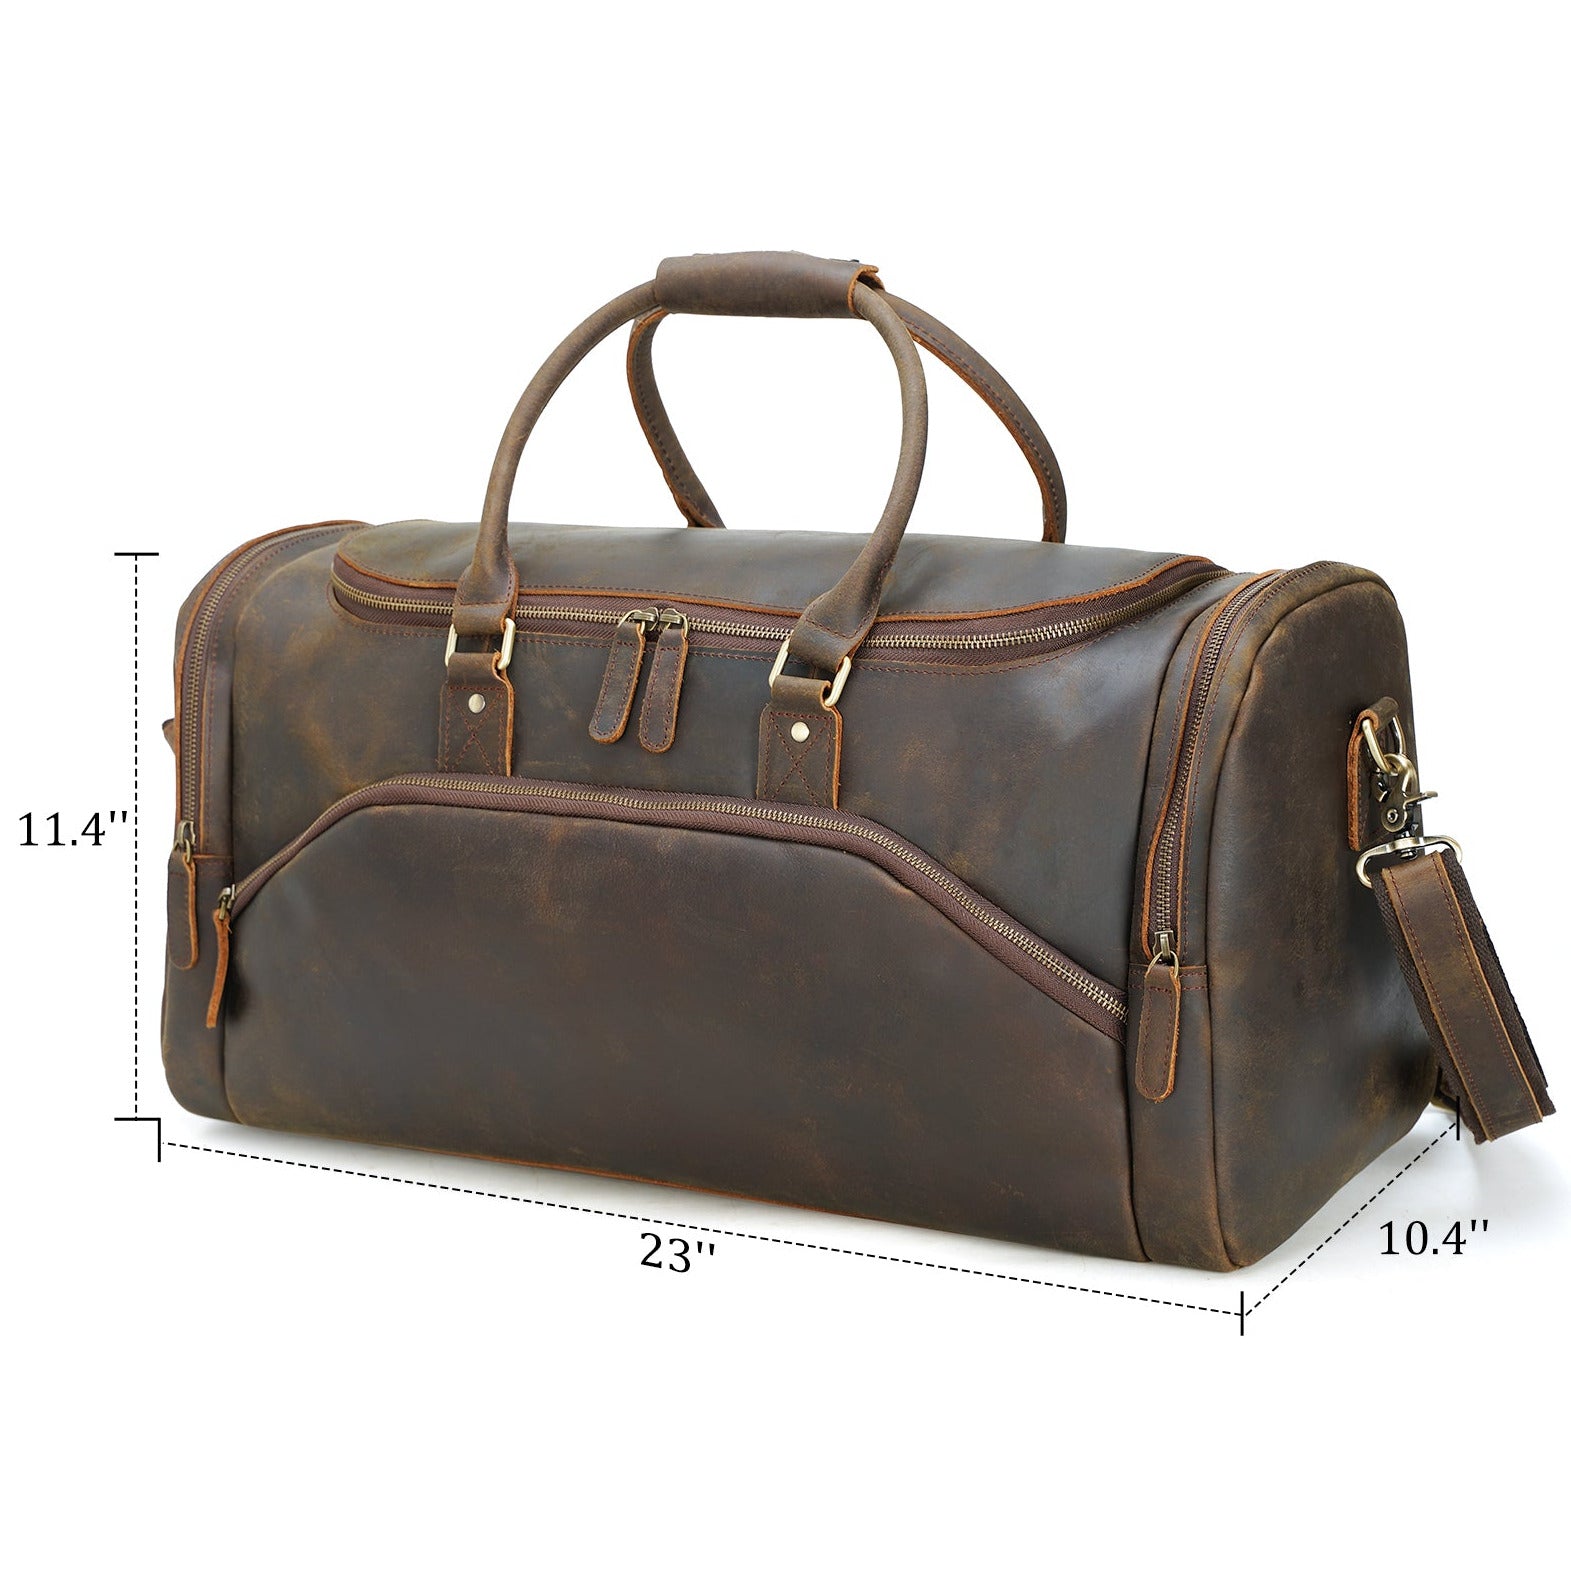 Polare 23" Full Grain Leather Vintage Duffle Weekender Overnight Travel Bag (Dimension)